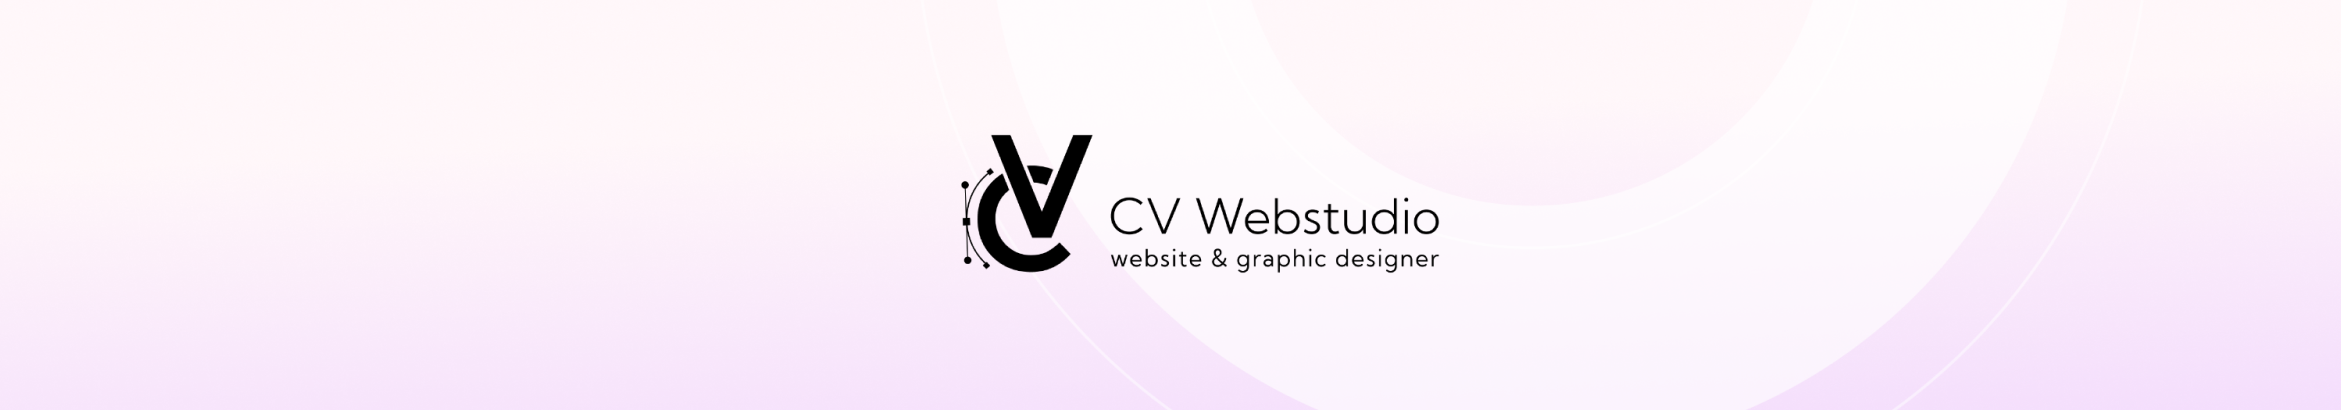 Czarina | cv_webstudio's profile banner